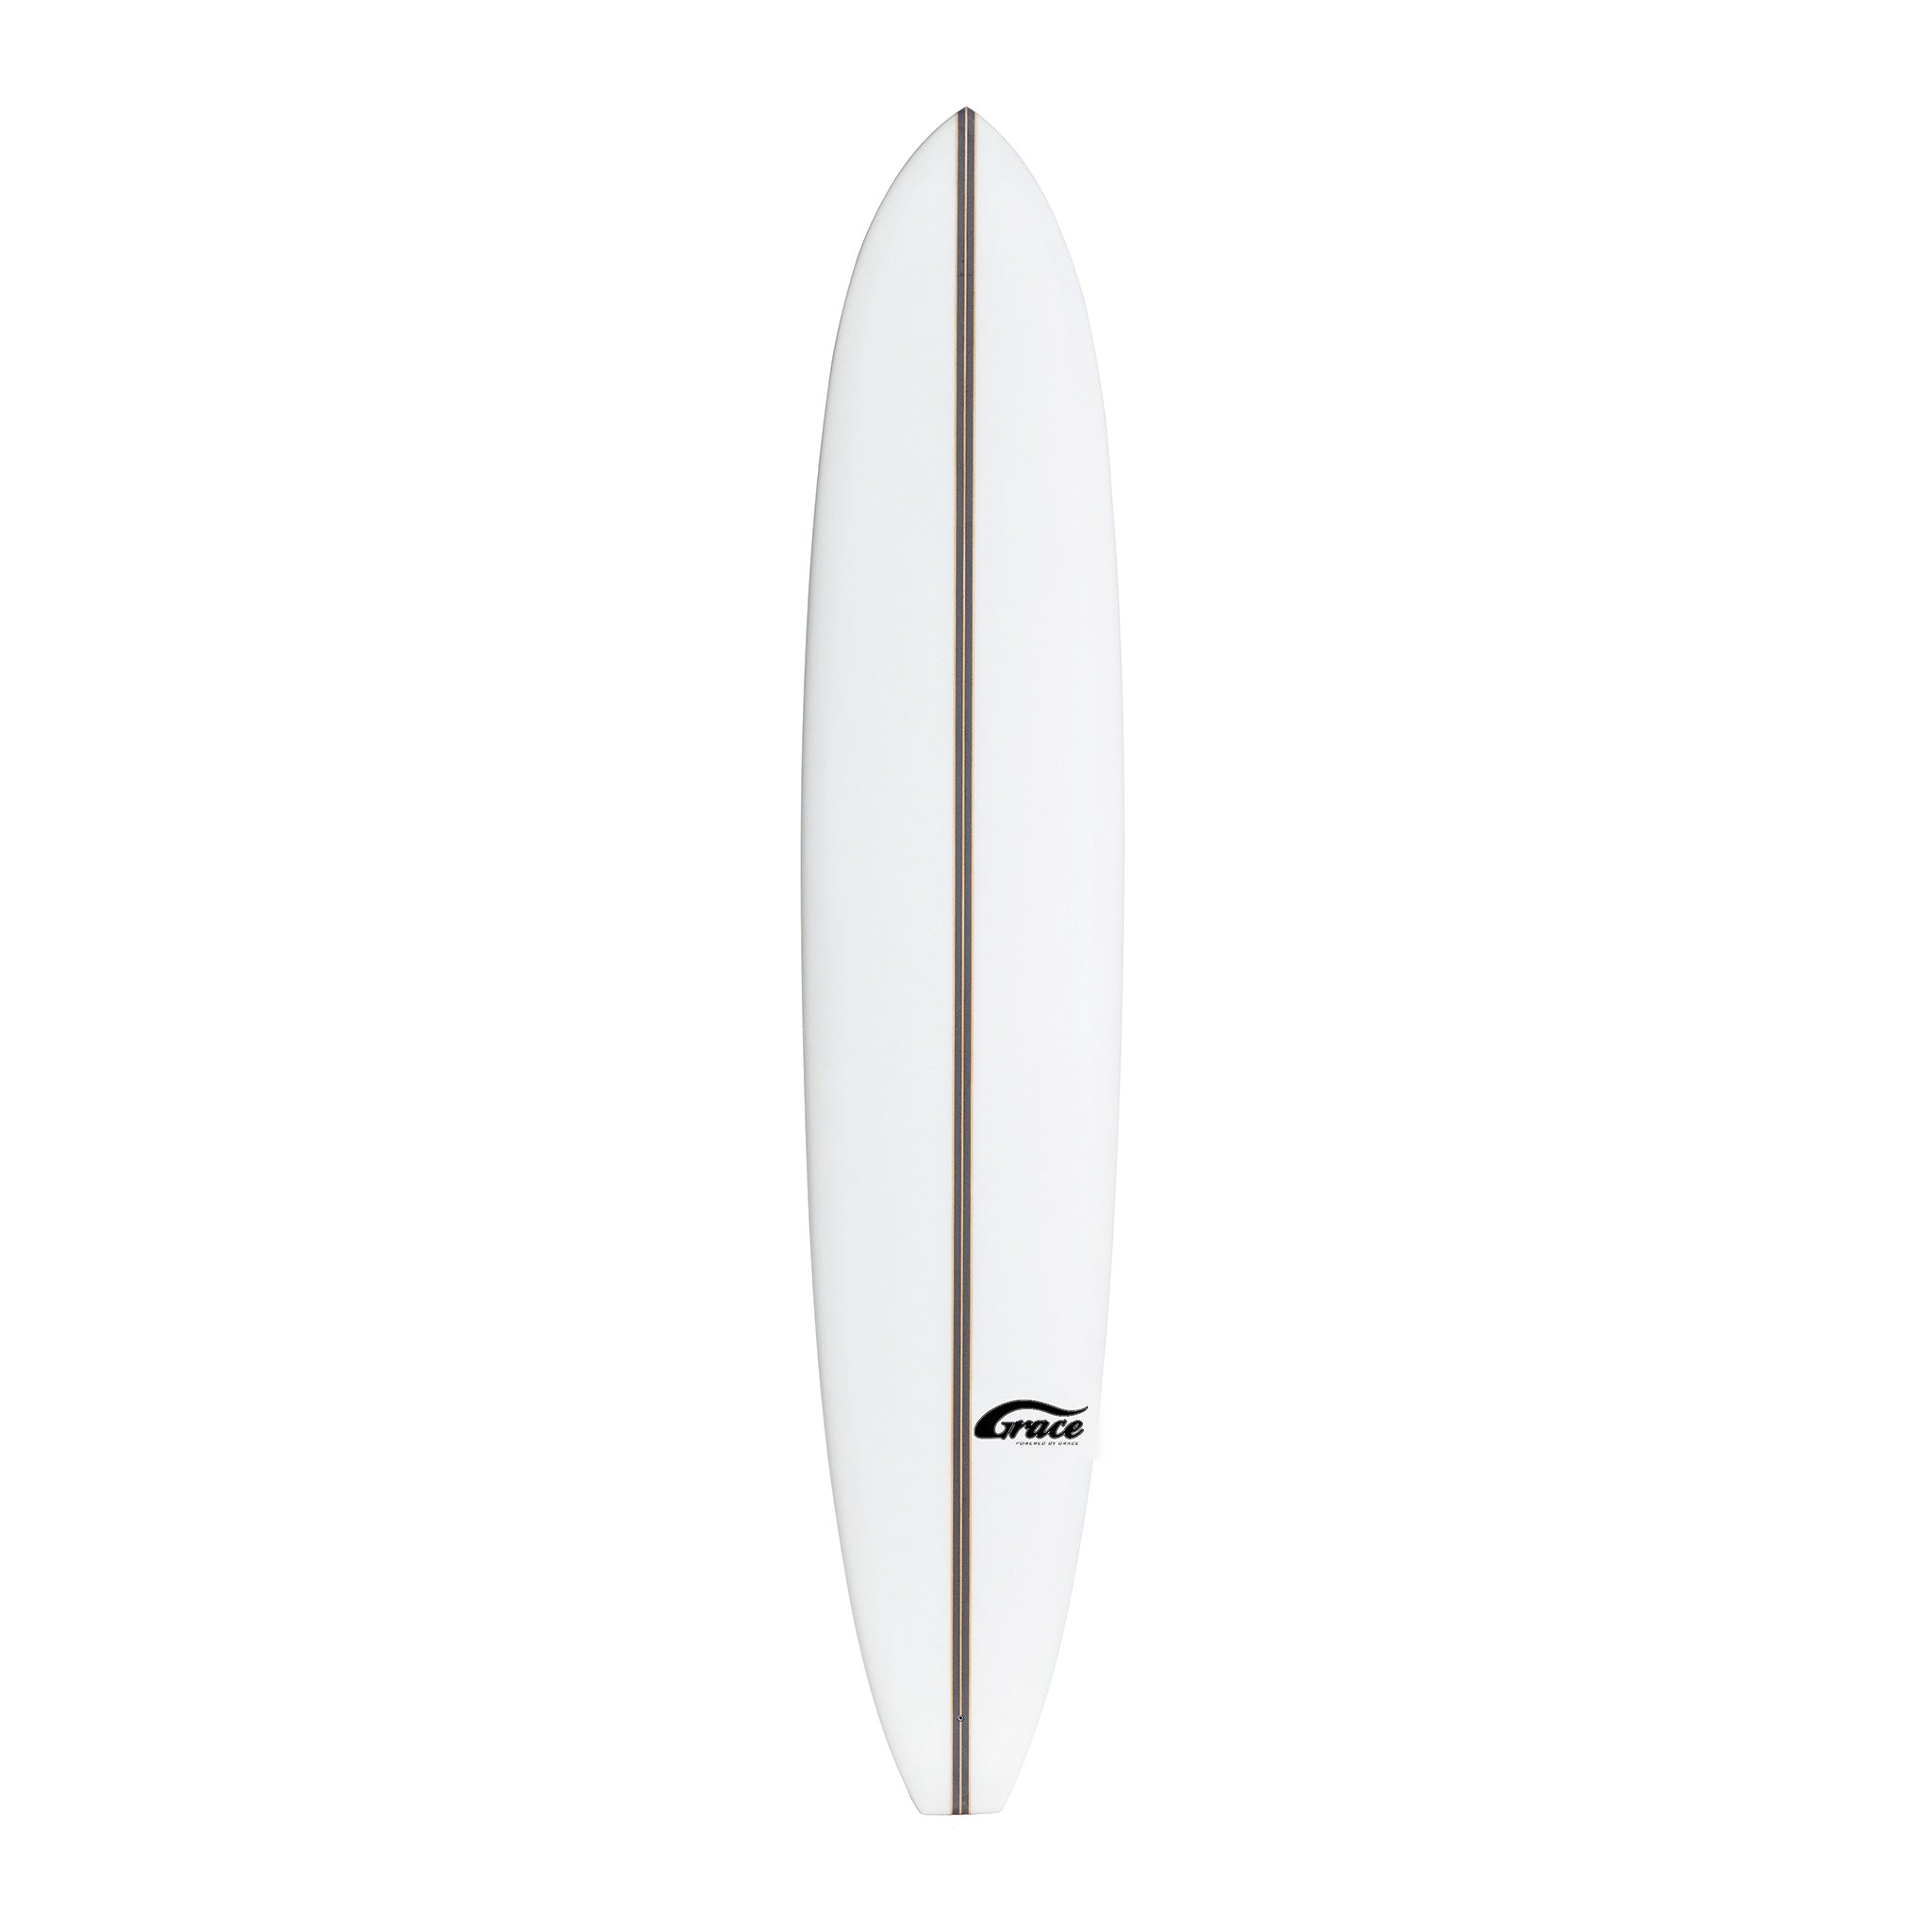 Phil Grace Surfboard Glider